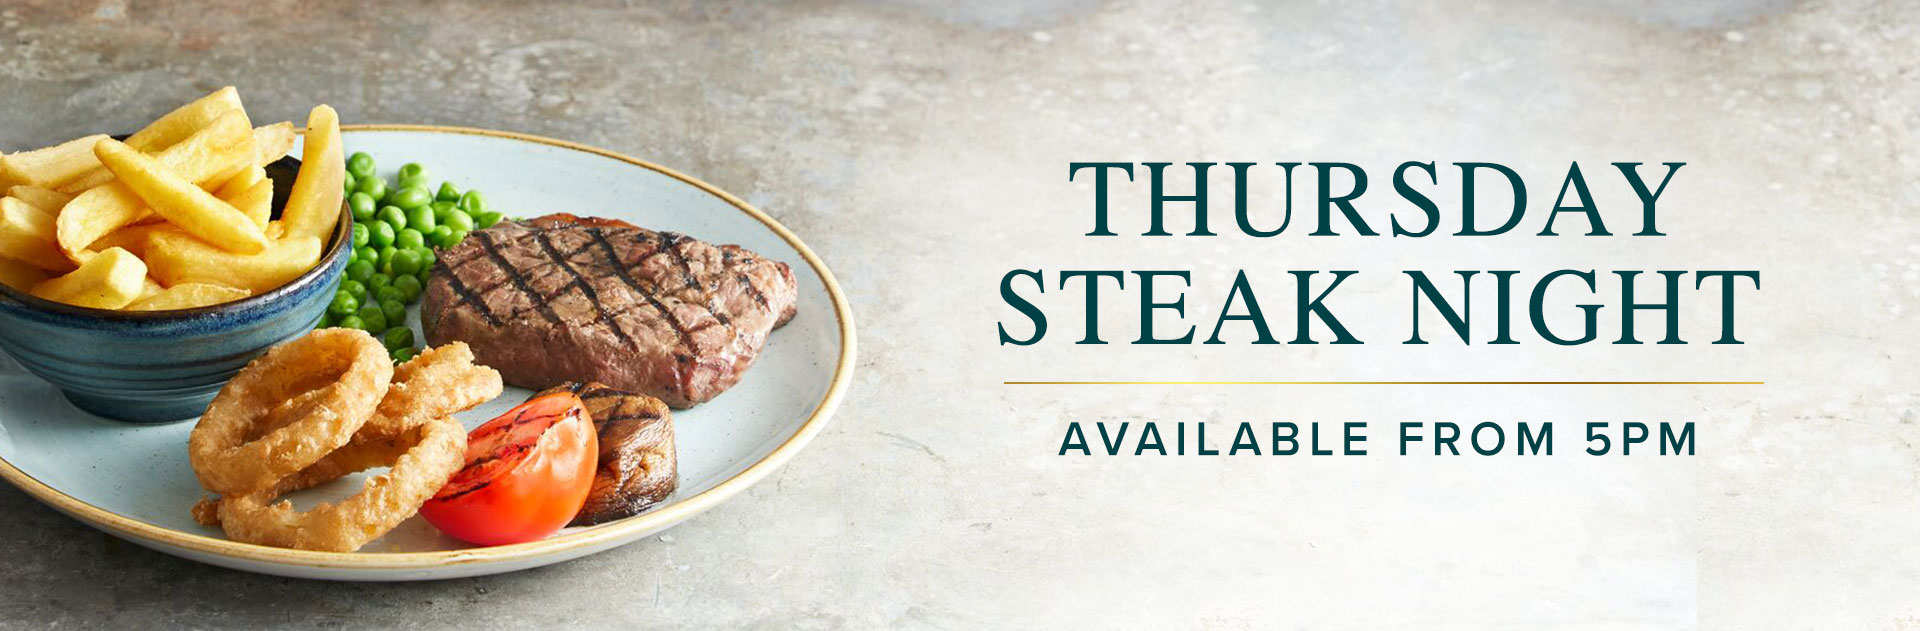 Thursday Steak Night at Three Hammers, St. Albans